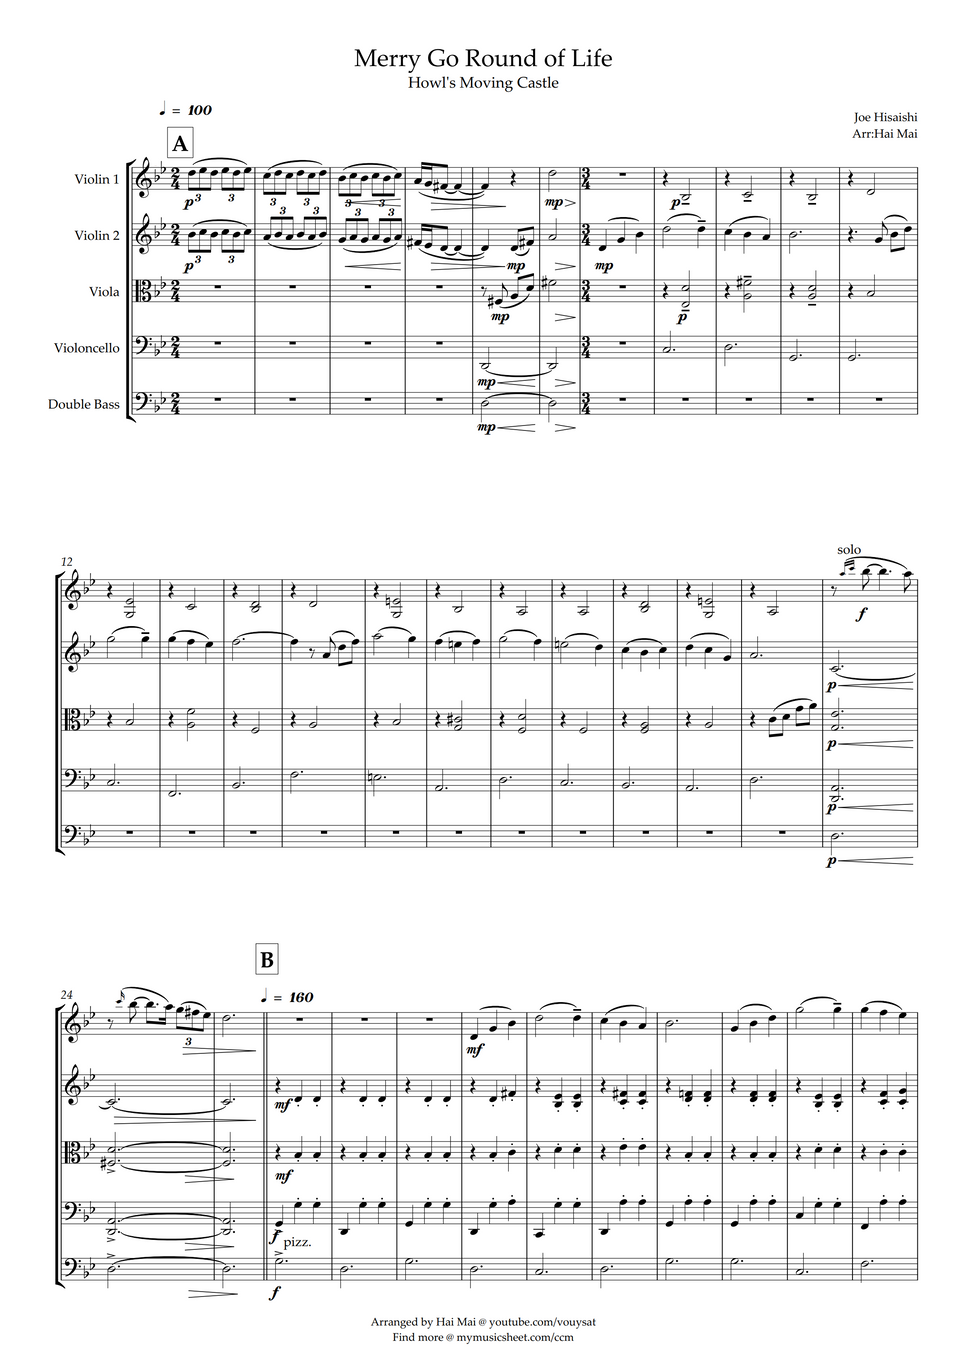 Joe Hisaishi - Merry Go Round of Life - String Quintet(Howl's Moving Castle) by Hai Mai